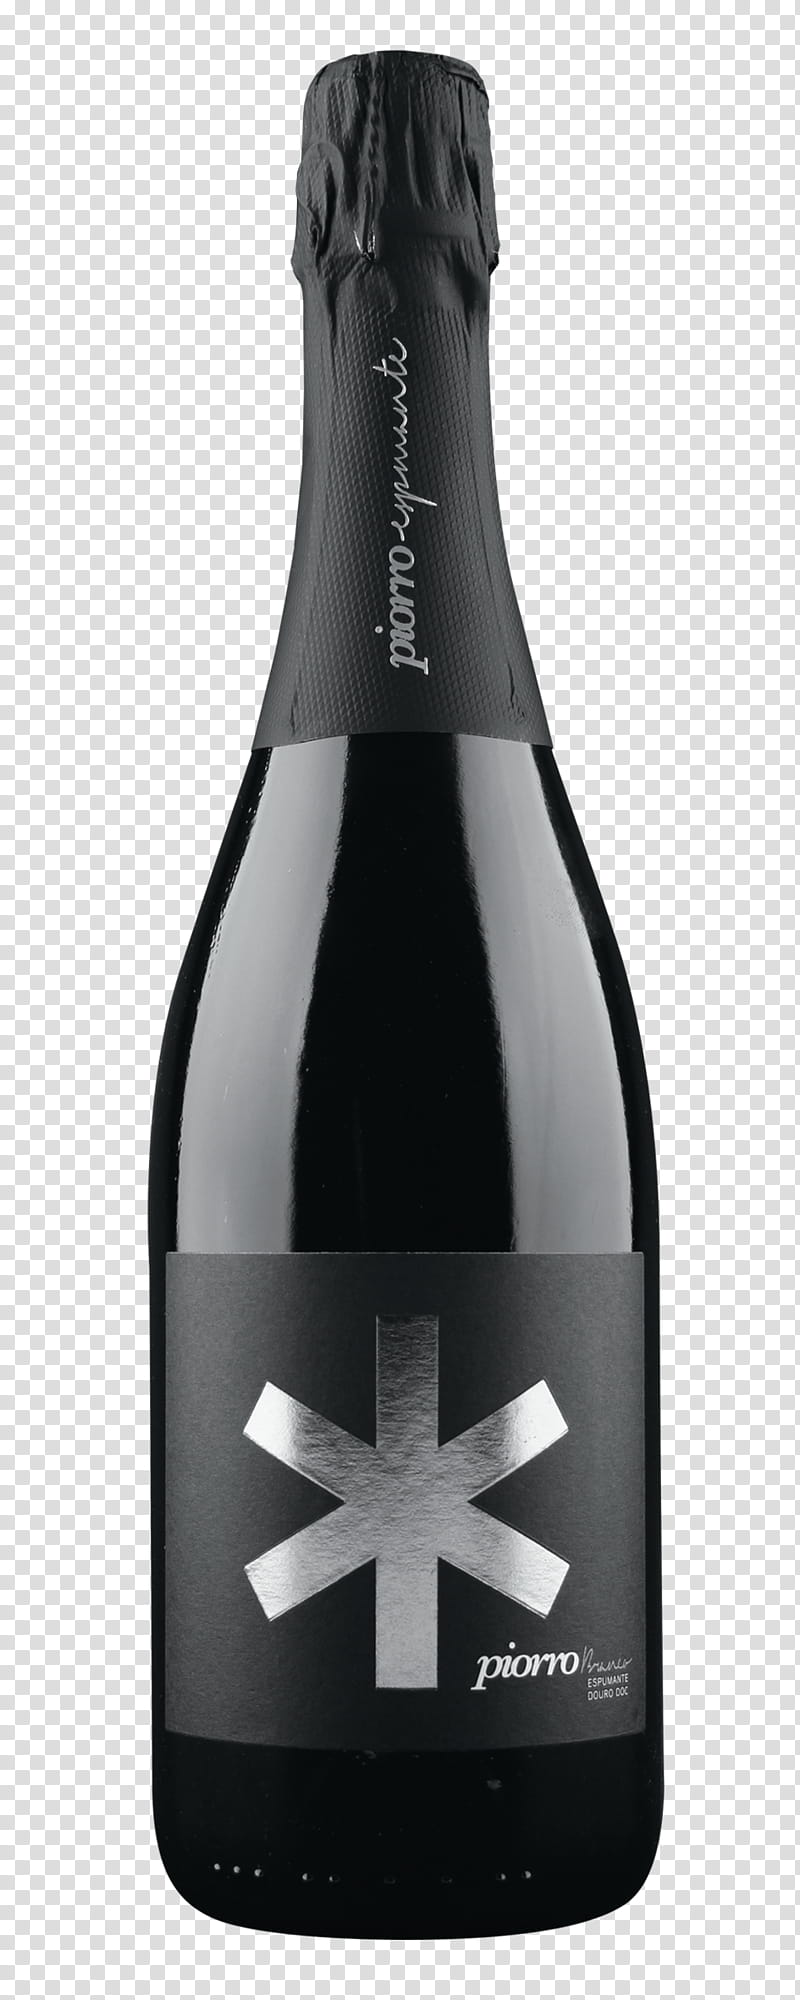 Champagne Bottle, Touriga Nacional, Touriga Franca, Pinot Noir, Wine, Red Wine, Tempranillo, Penfolds transparent background PNG clipart